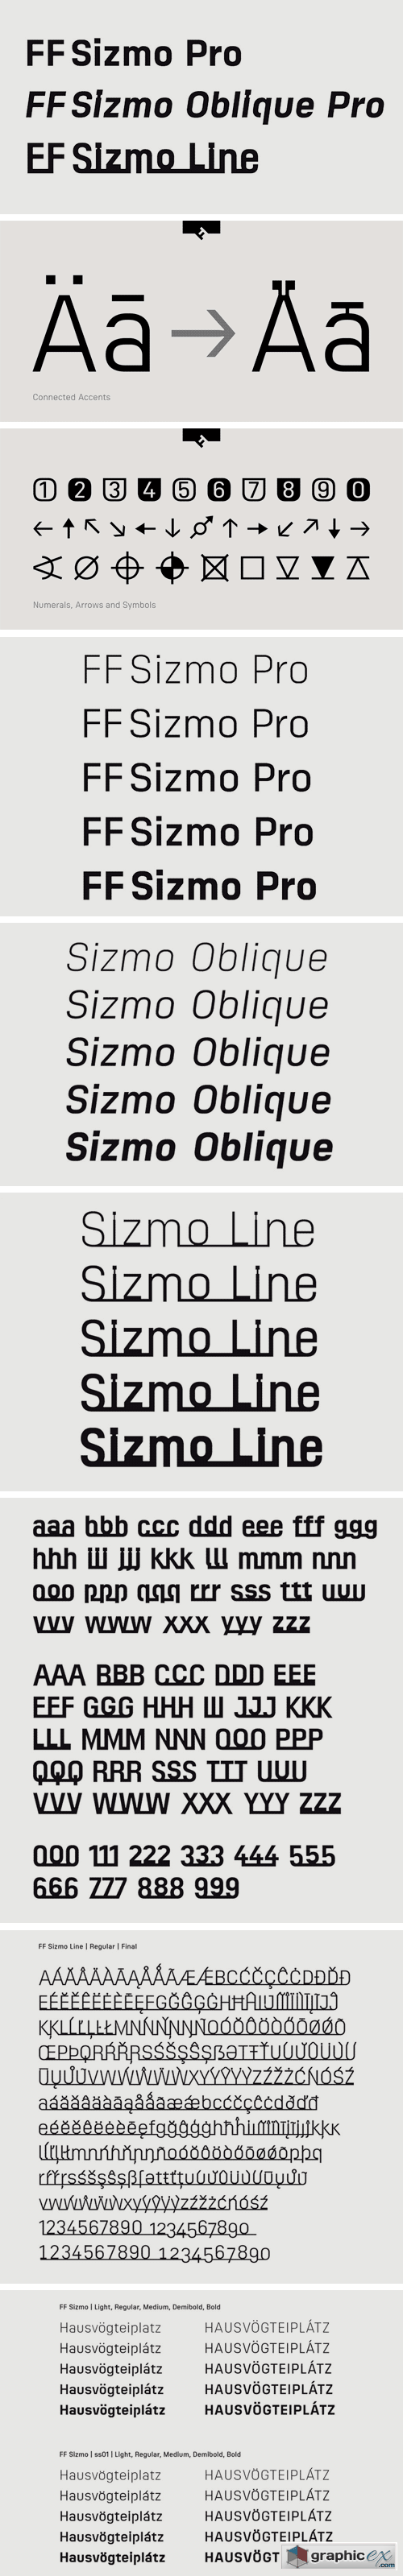 FF Sizmo Font Family